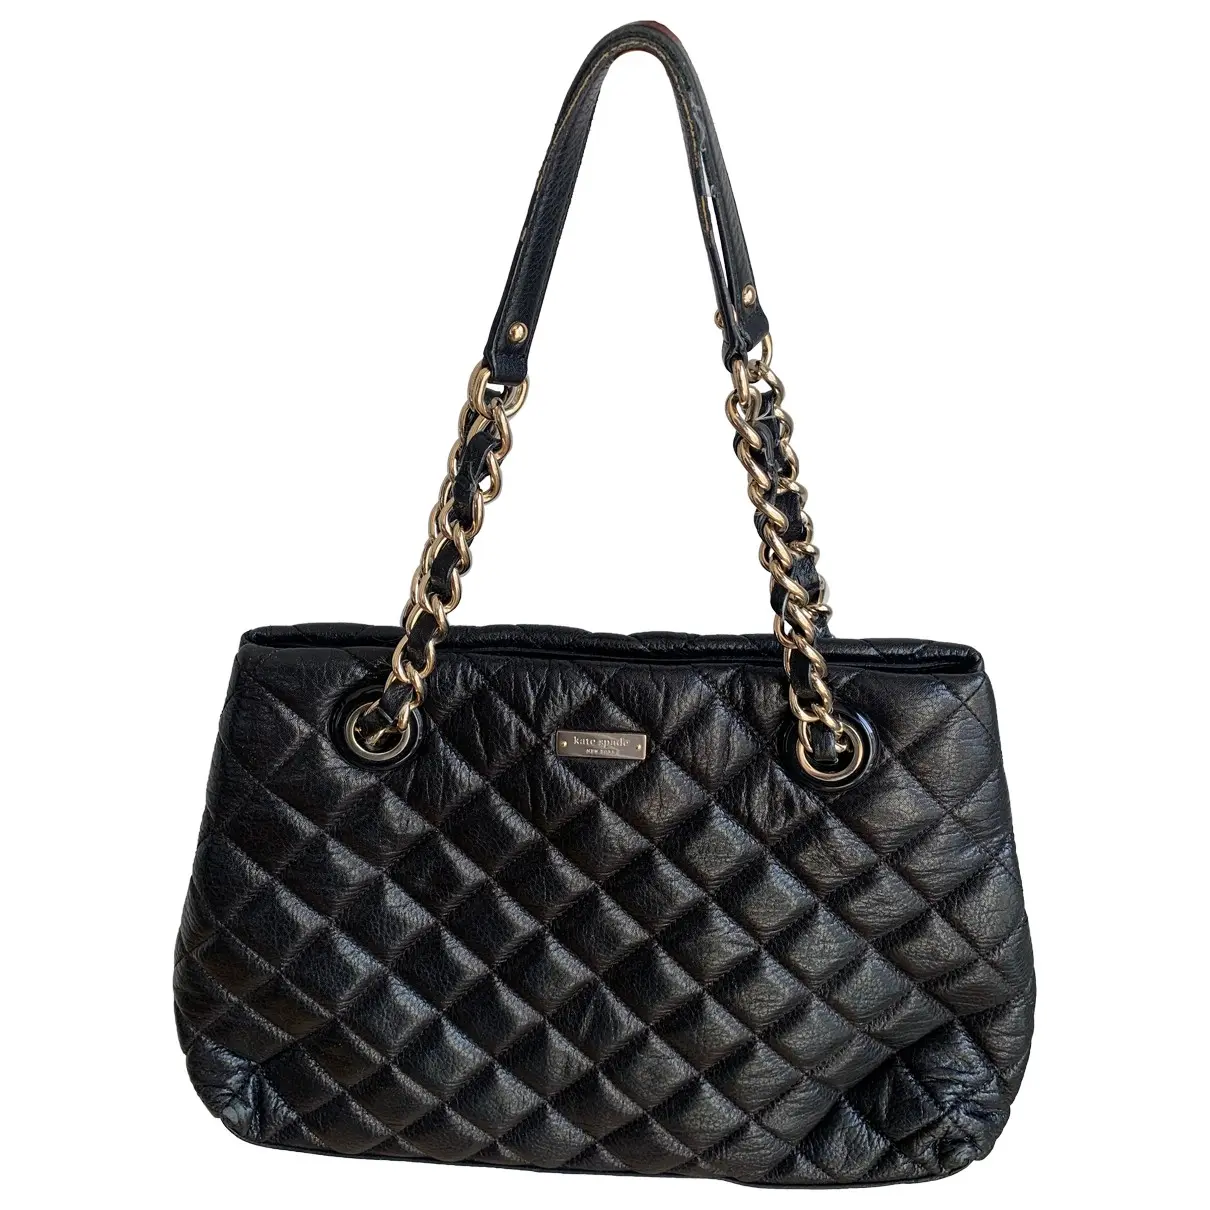 Patent leather handbag Kate Spade